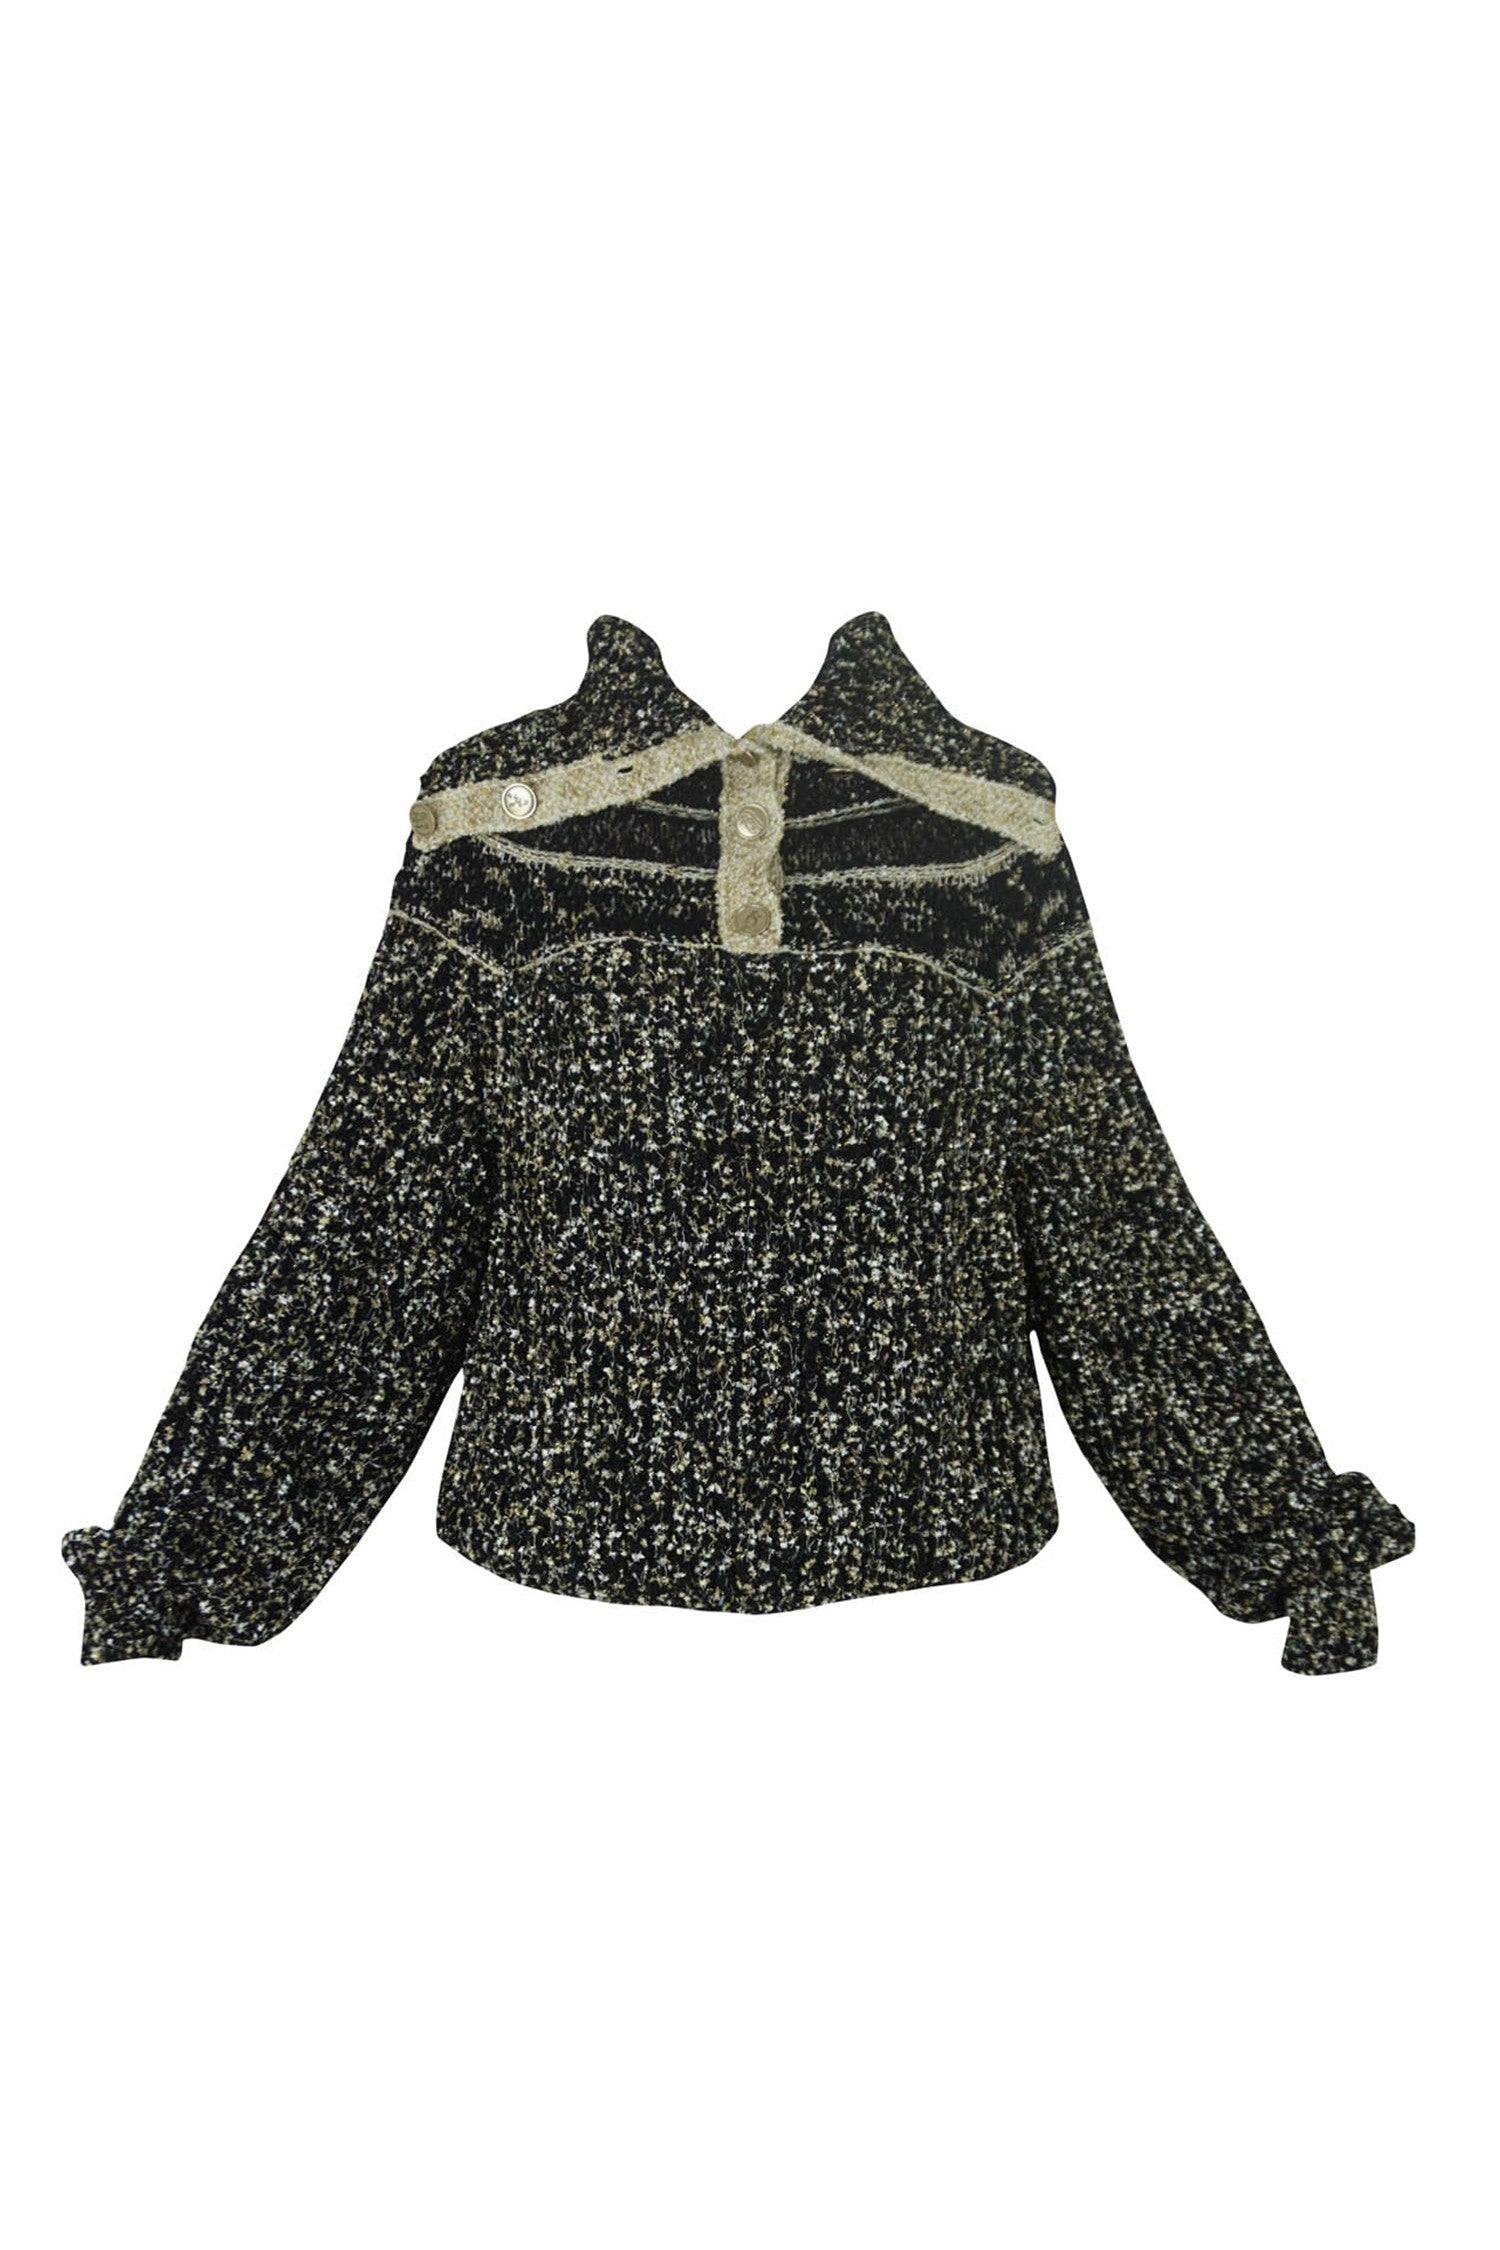 Chanel Lessage Sweater Metiers D'Art 2019 Egypt Sz 34